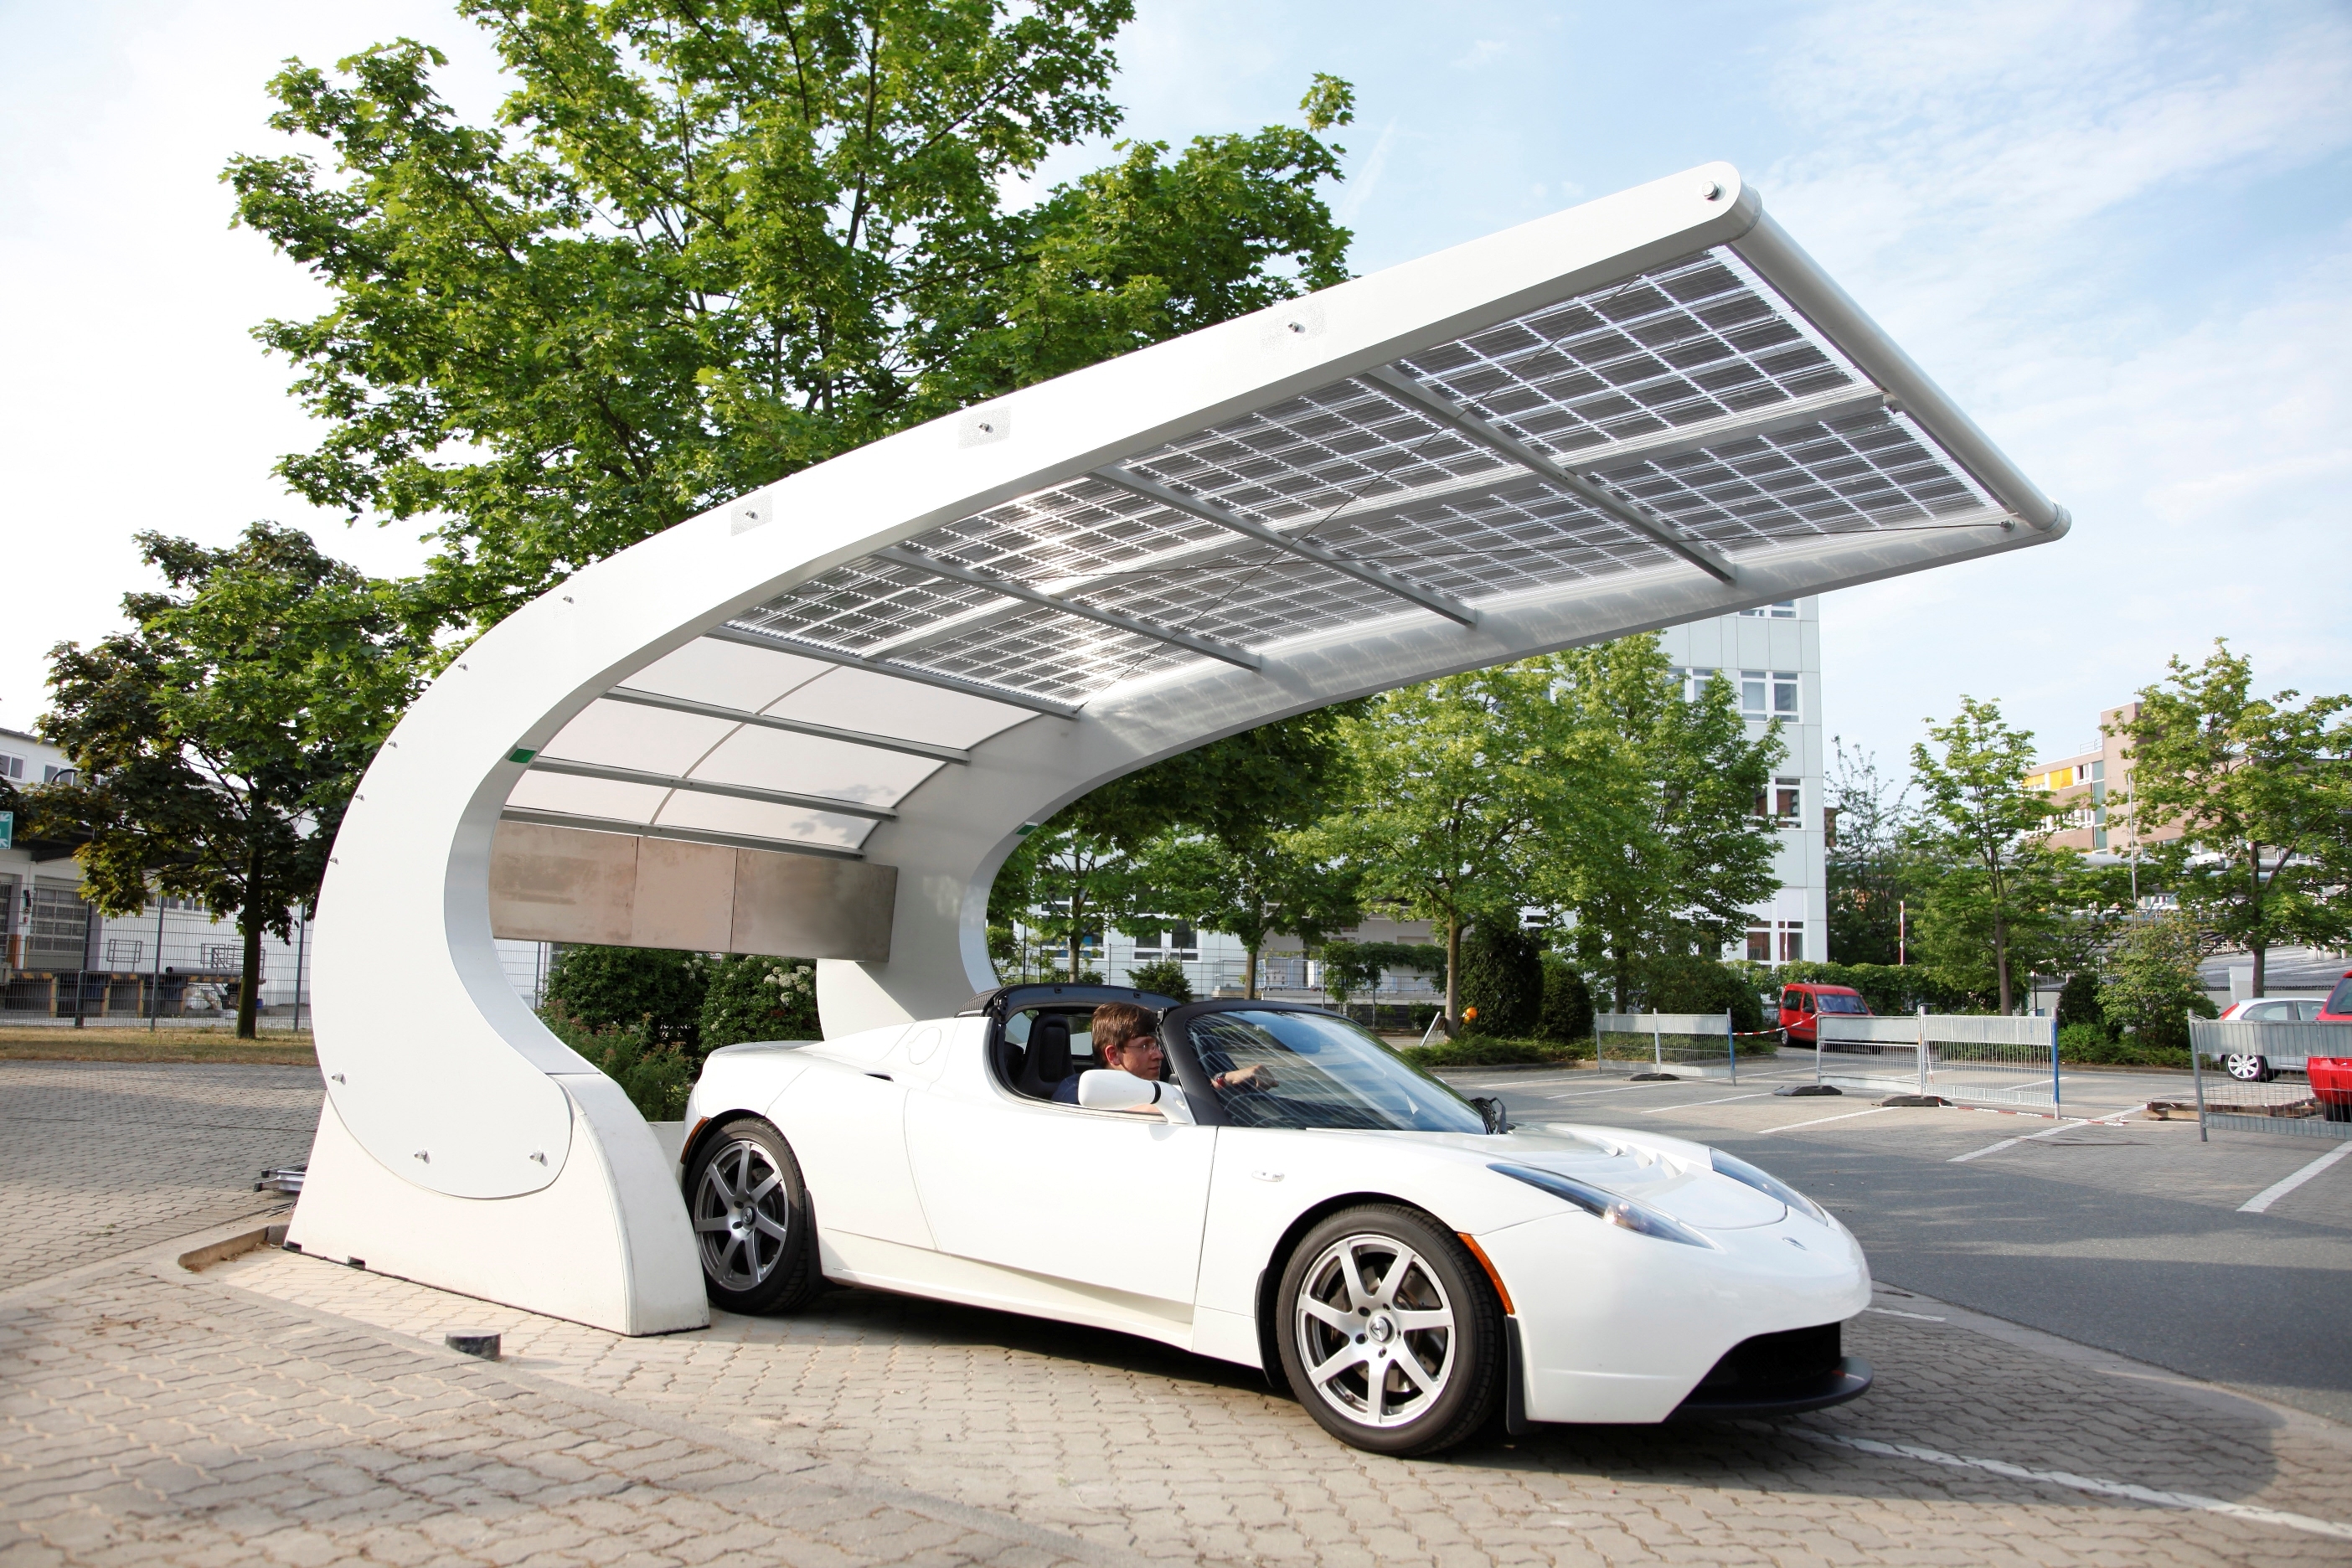 Renewable Energy Parking